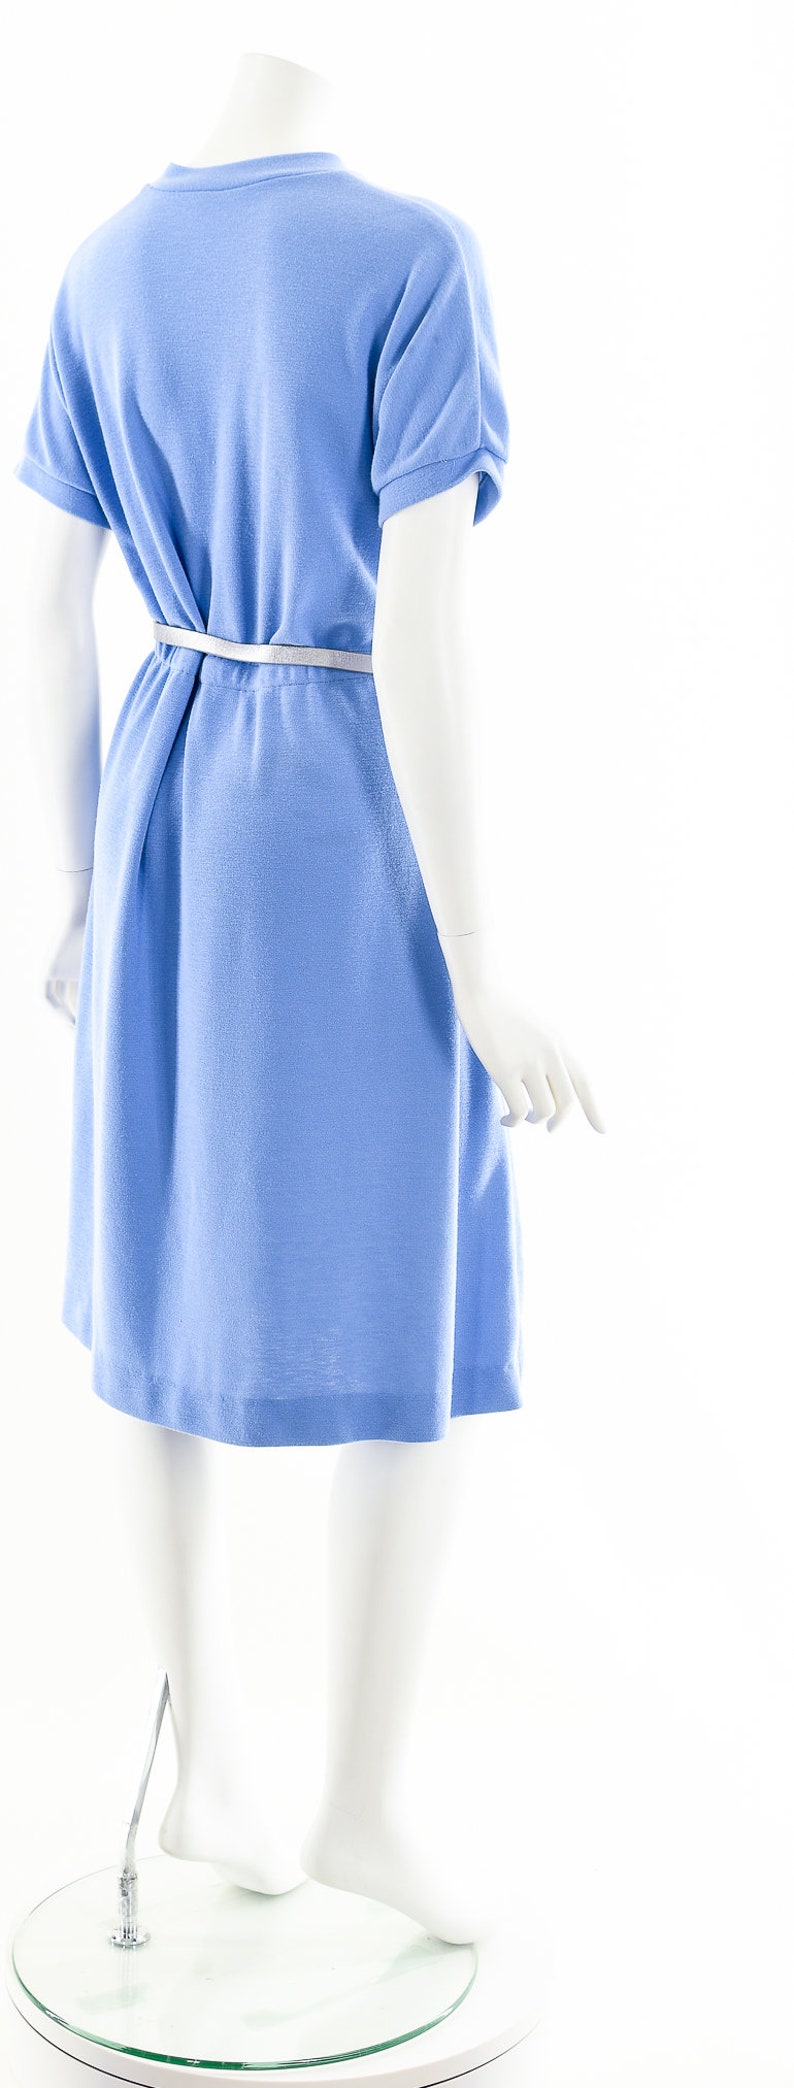 blue knit tshirt dress,80s knit fit and flare dress,mock neck dress, image 6